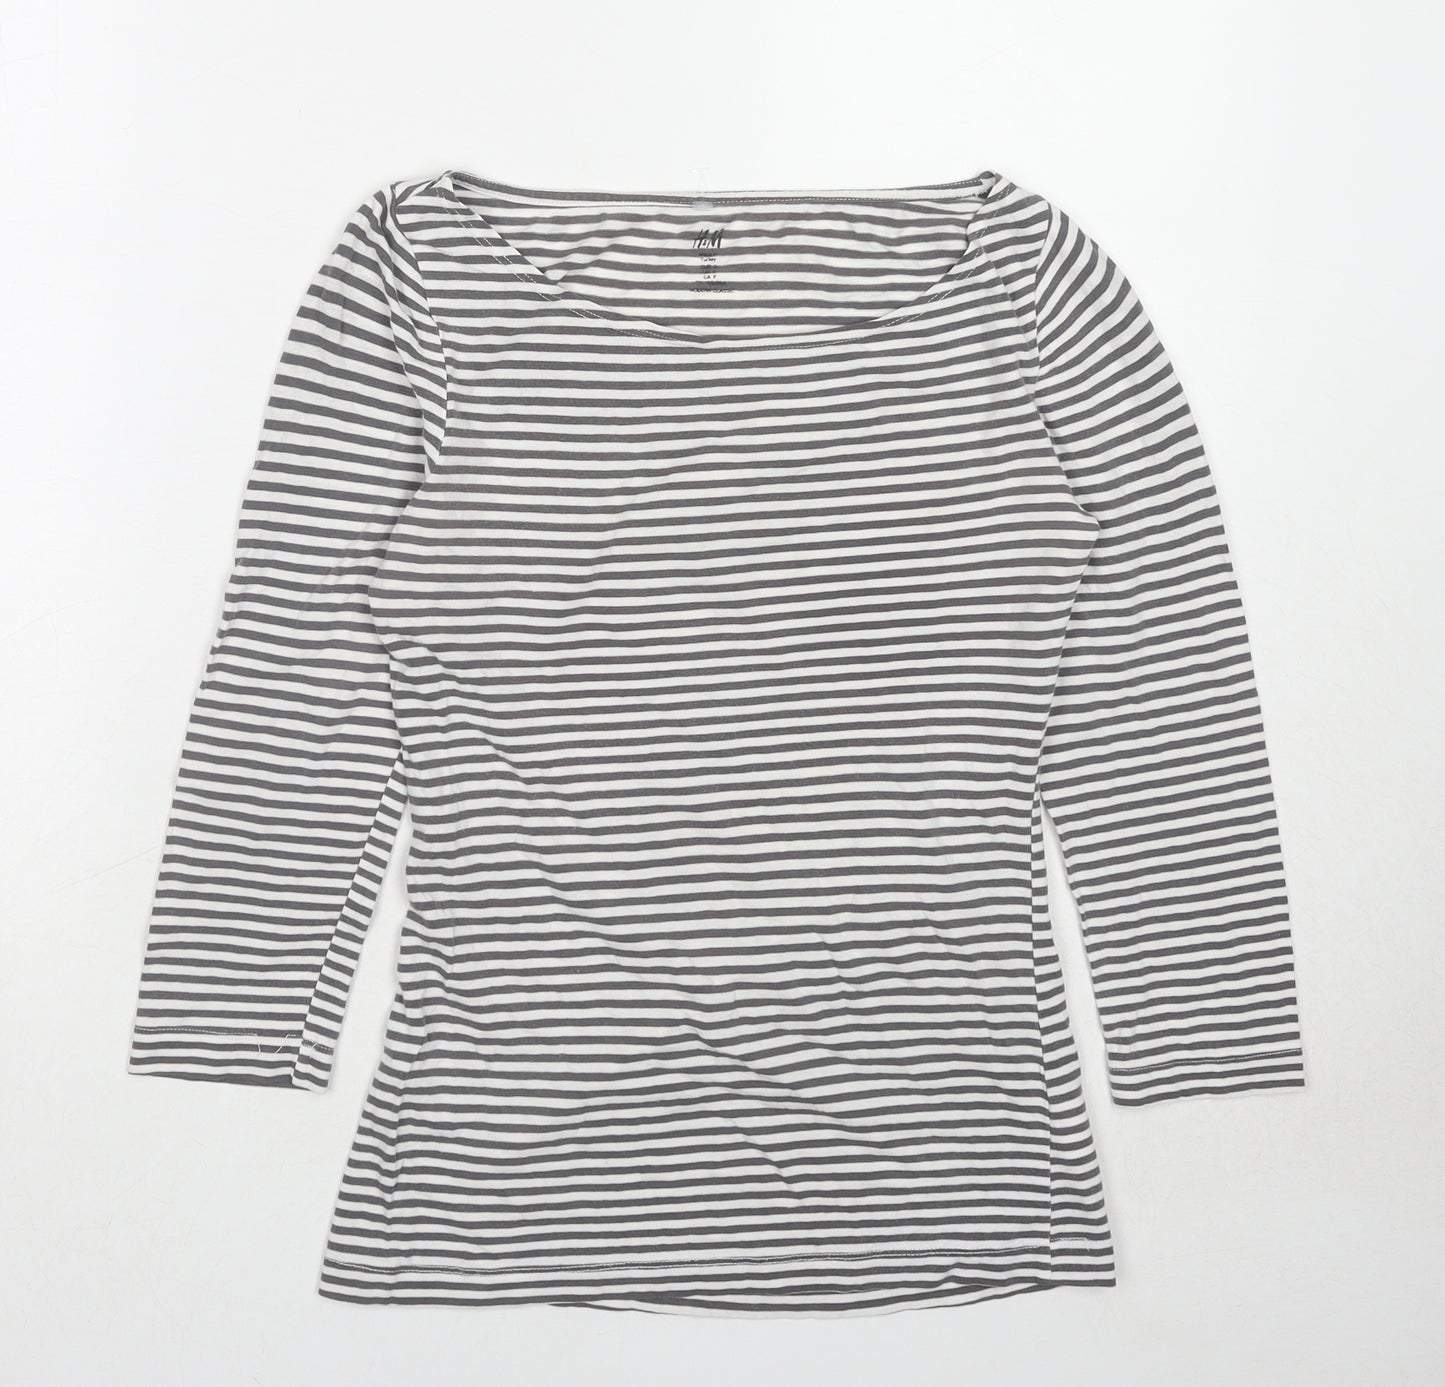 H&M Womens Grey Striped Cotton Basic T-Shirt Size S Boat Neck